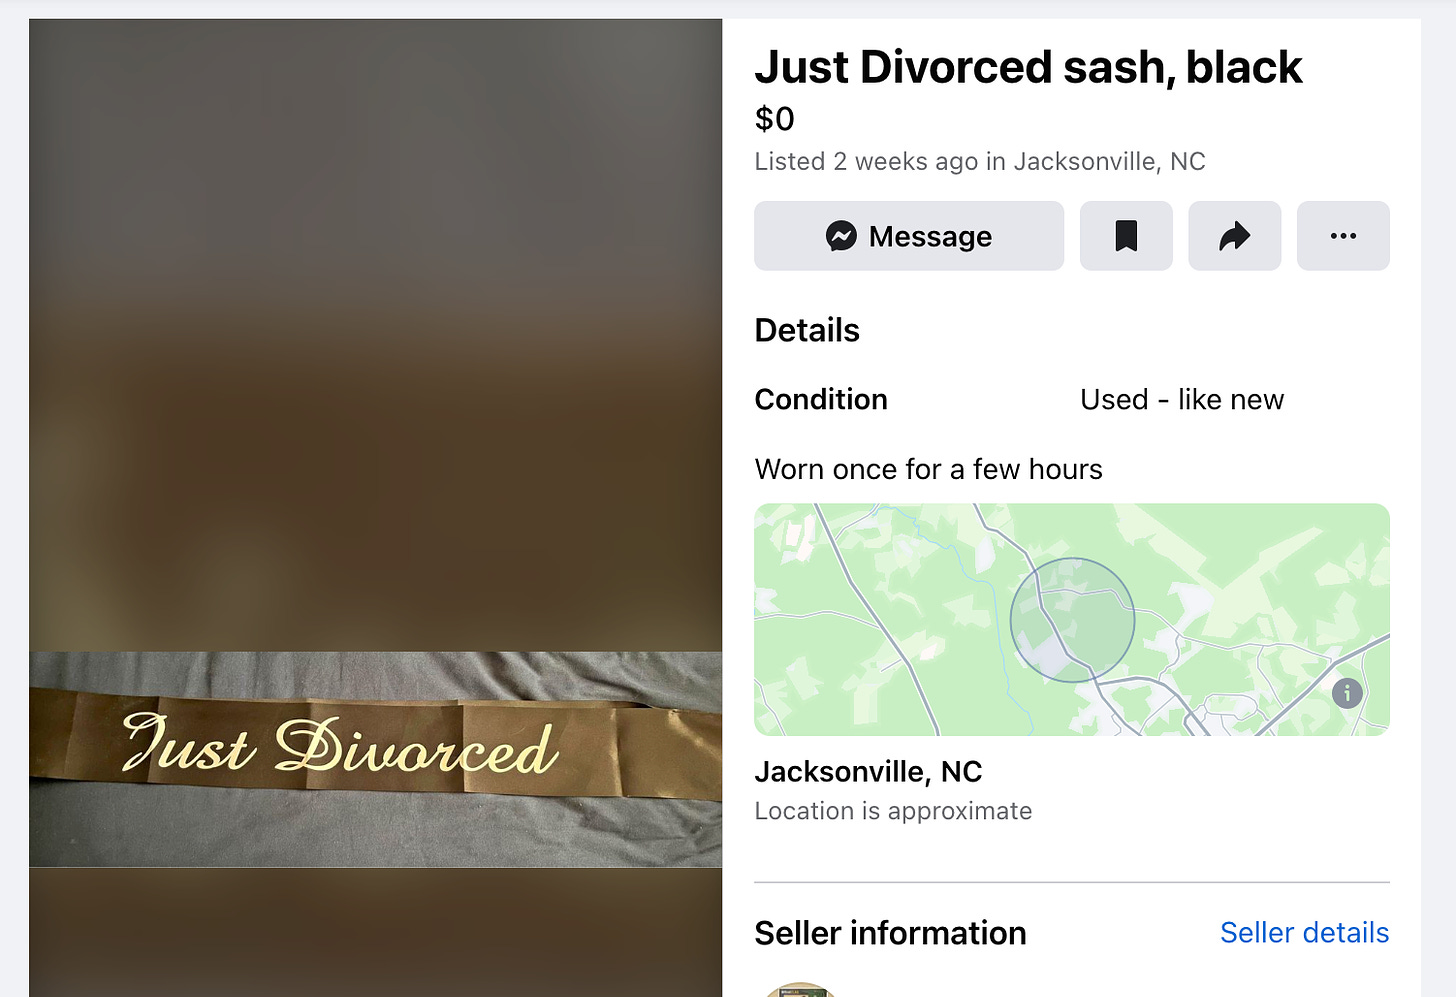 Facebook marketplace listing for "Just Divorced Sash". Description: "worn once for a few hours"